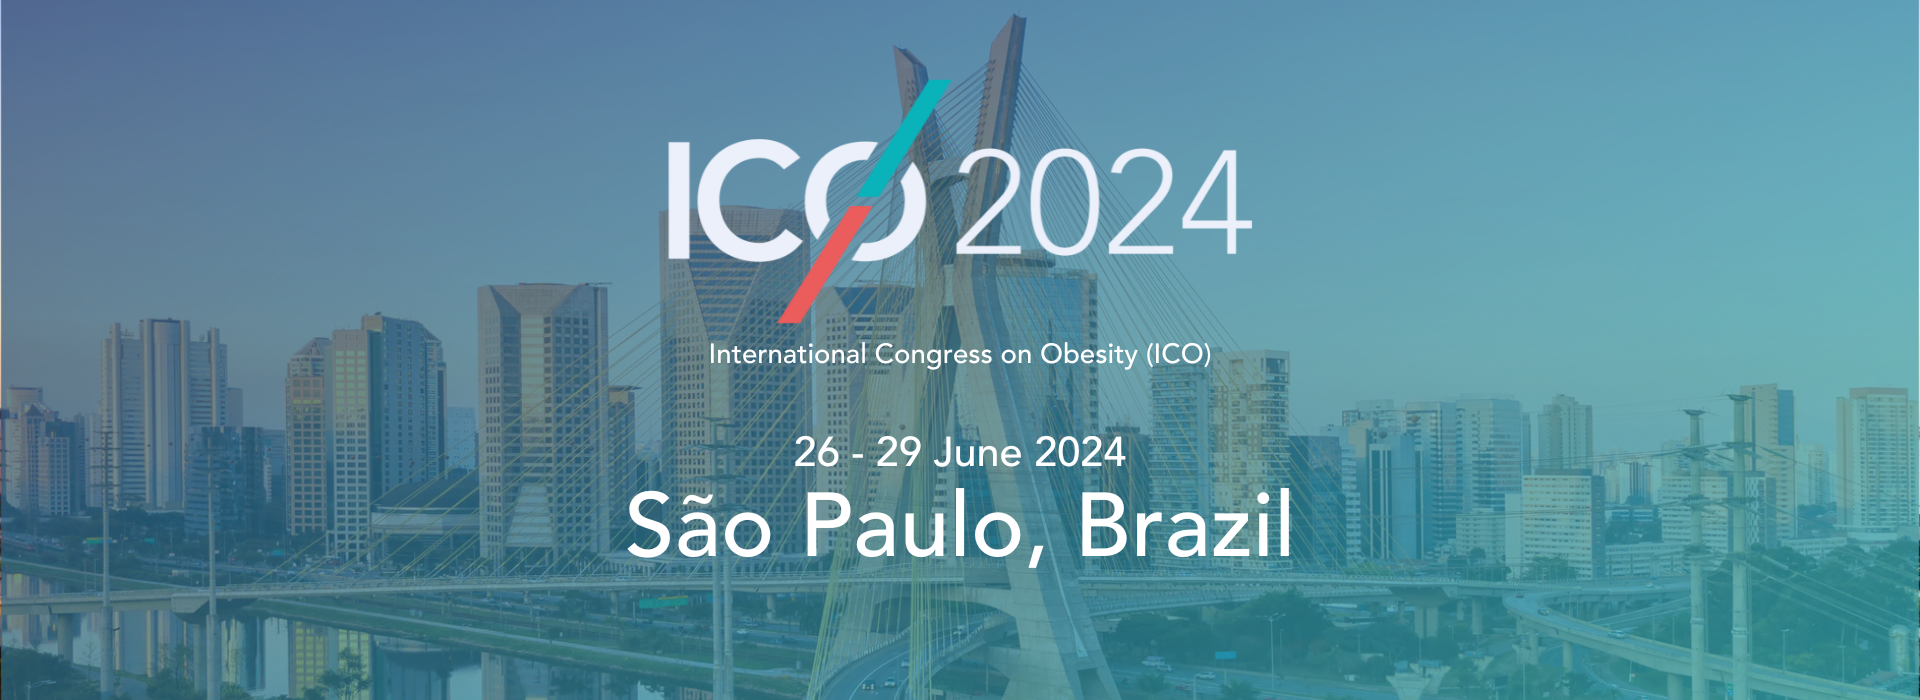 International Congress on Obesity 2024 World Obesity Federation